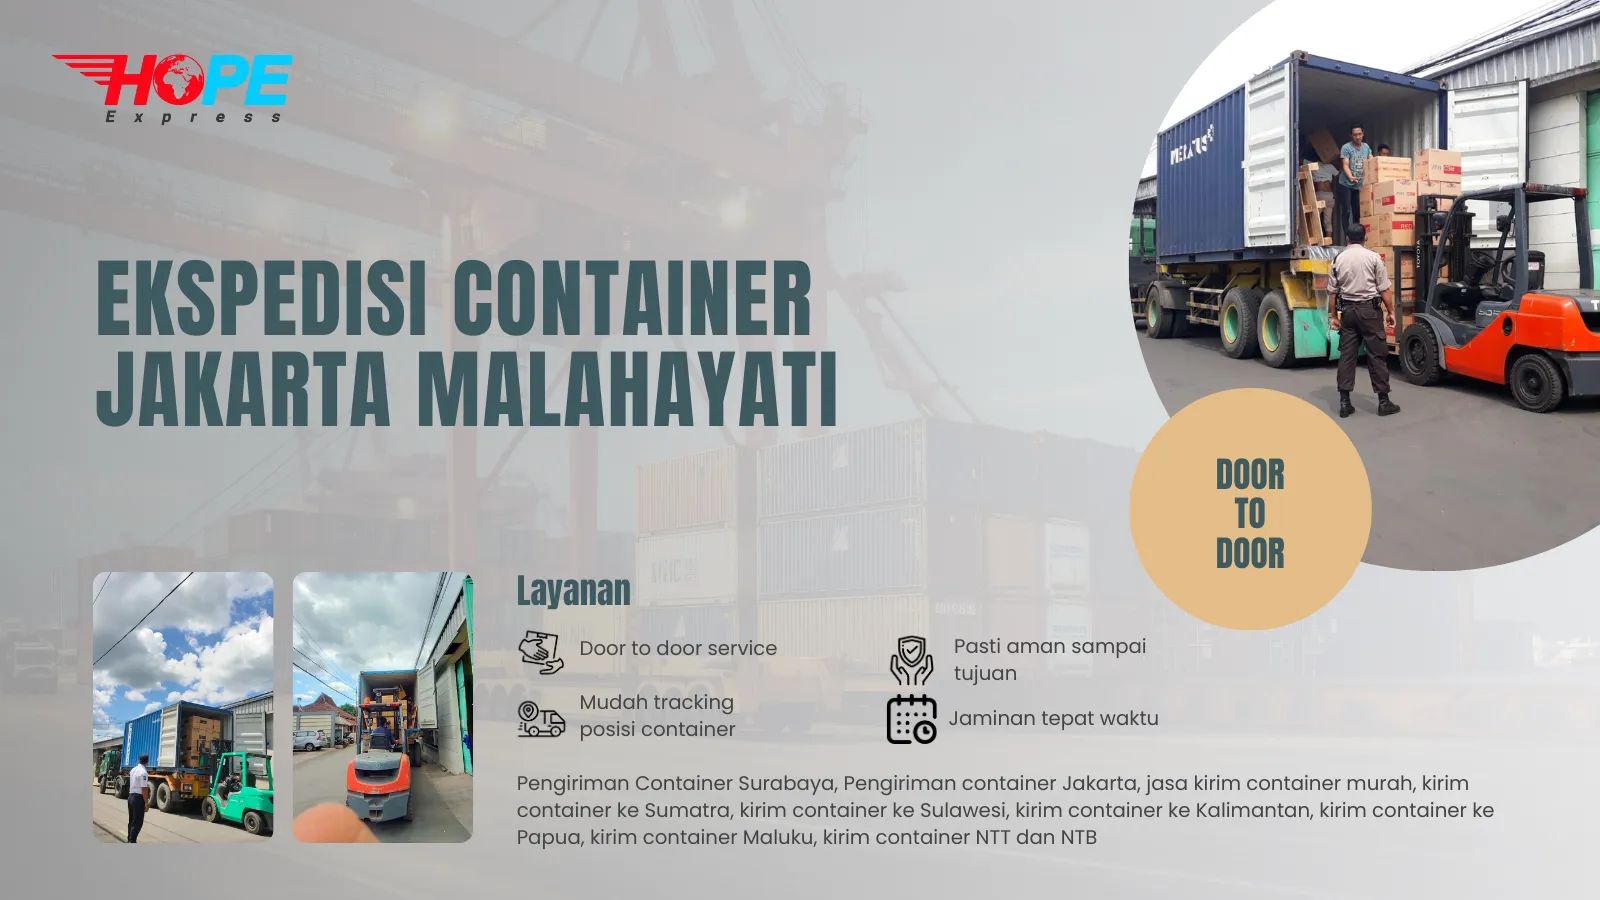 Ekspedisi Container Jakarta Malahayati